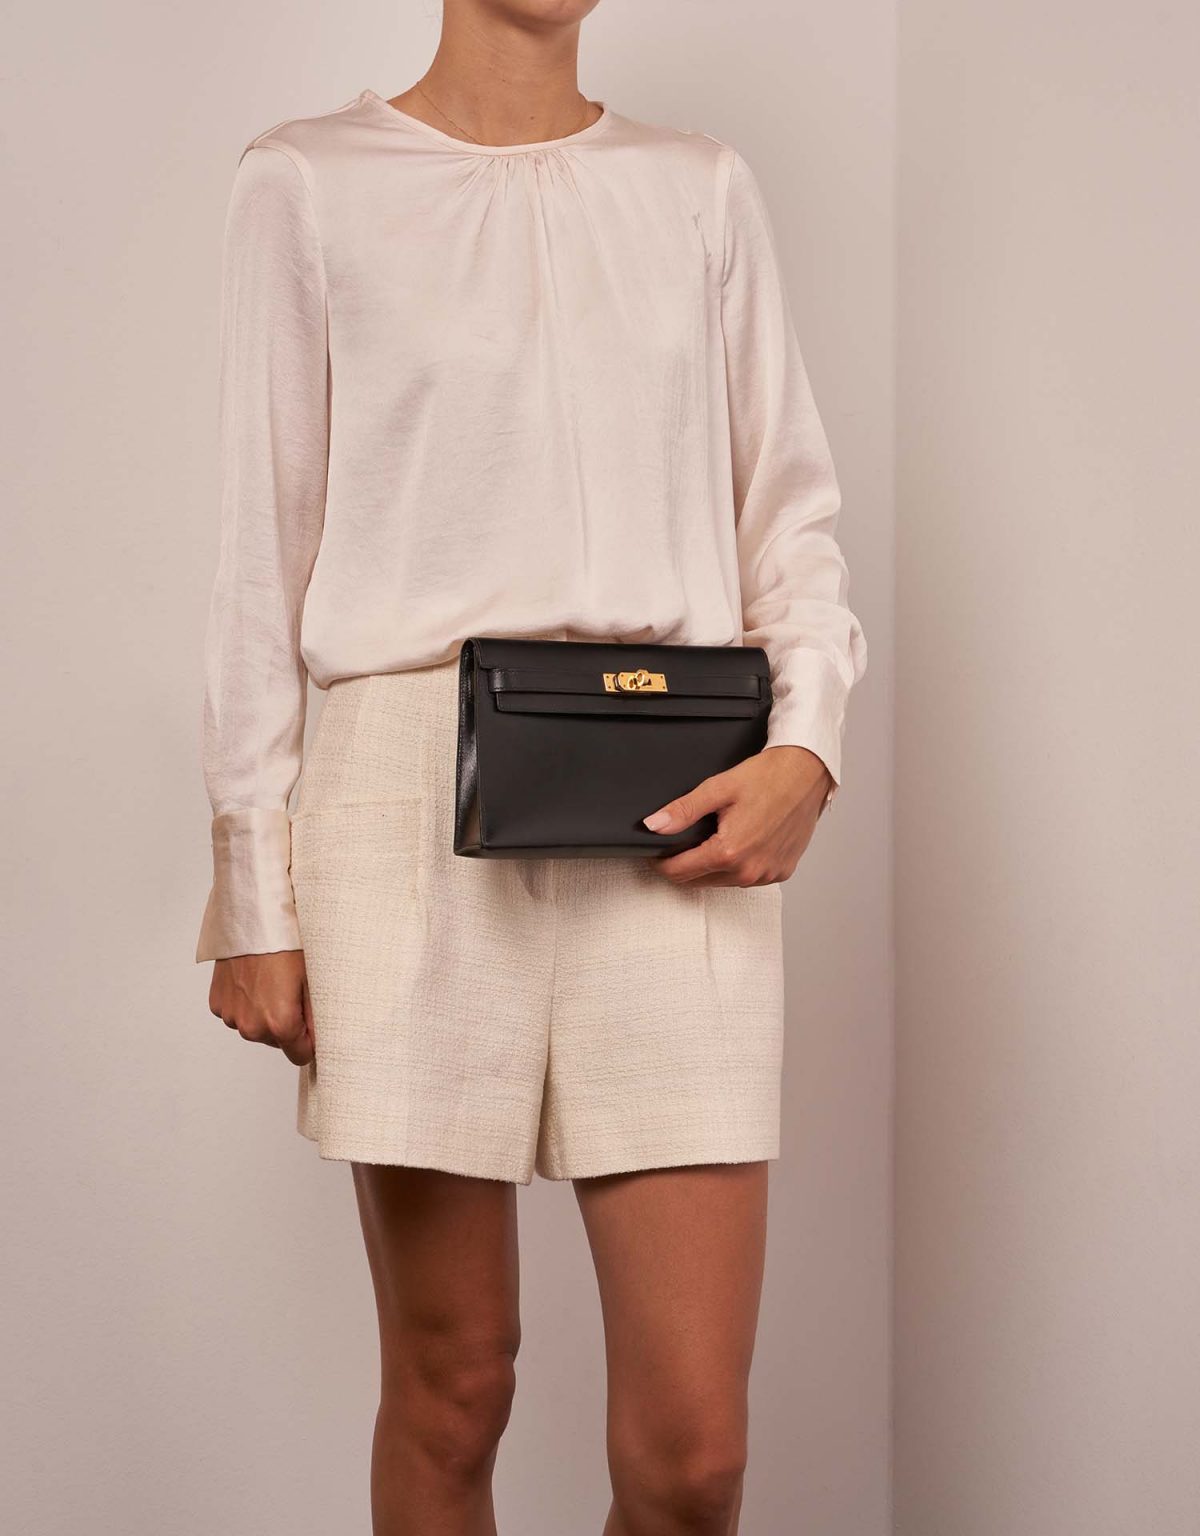 Hermès Kelly Elan Pochette Box Black | SACLÀB